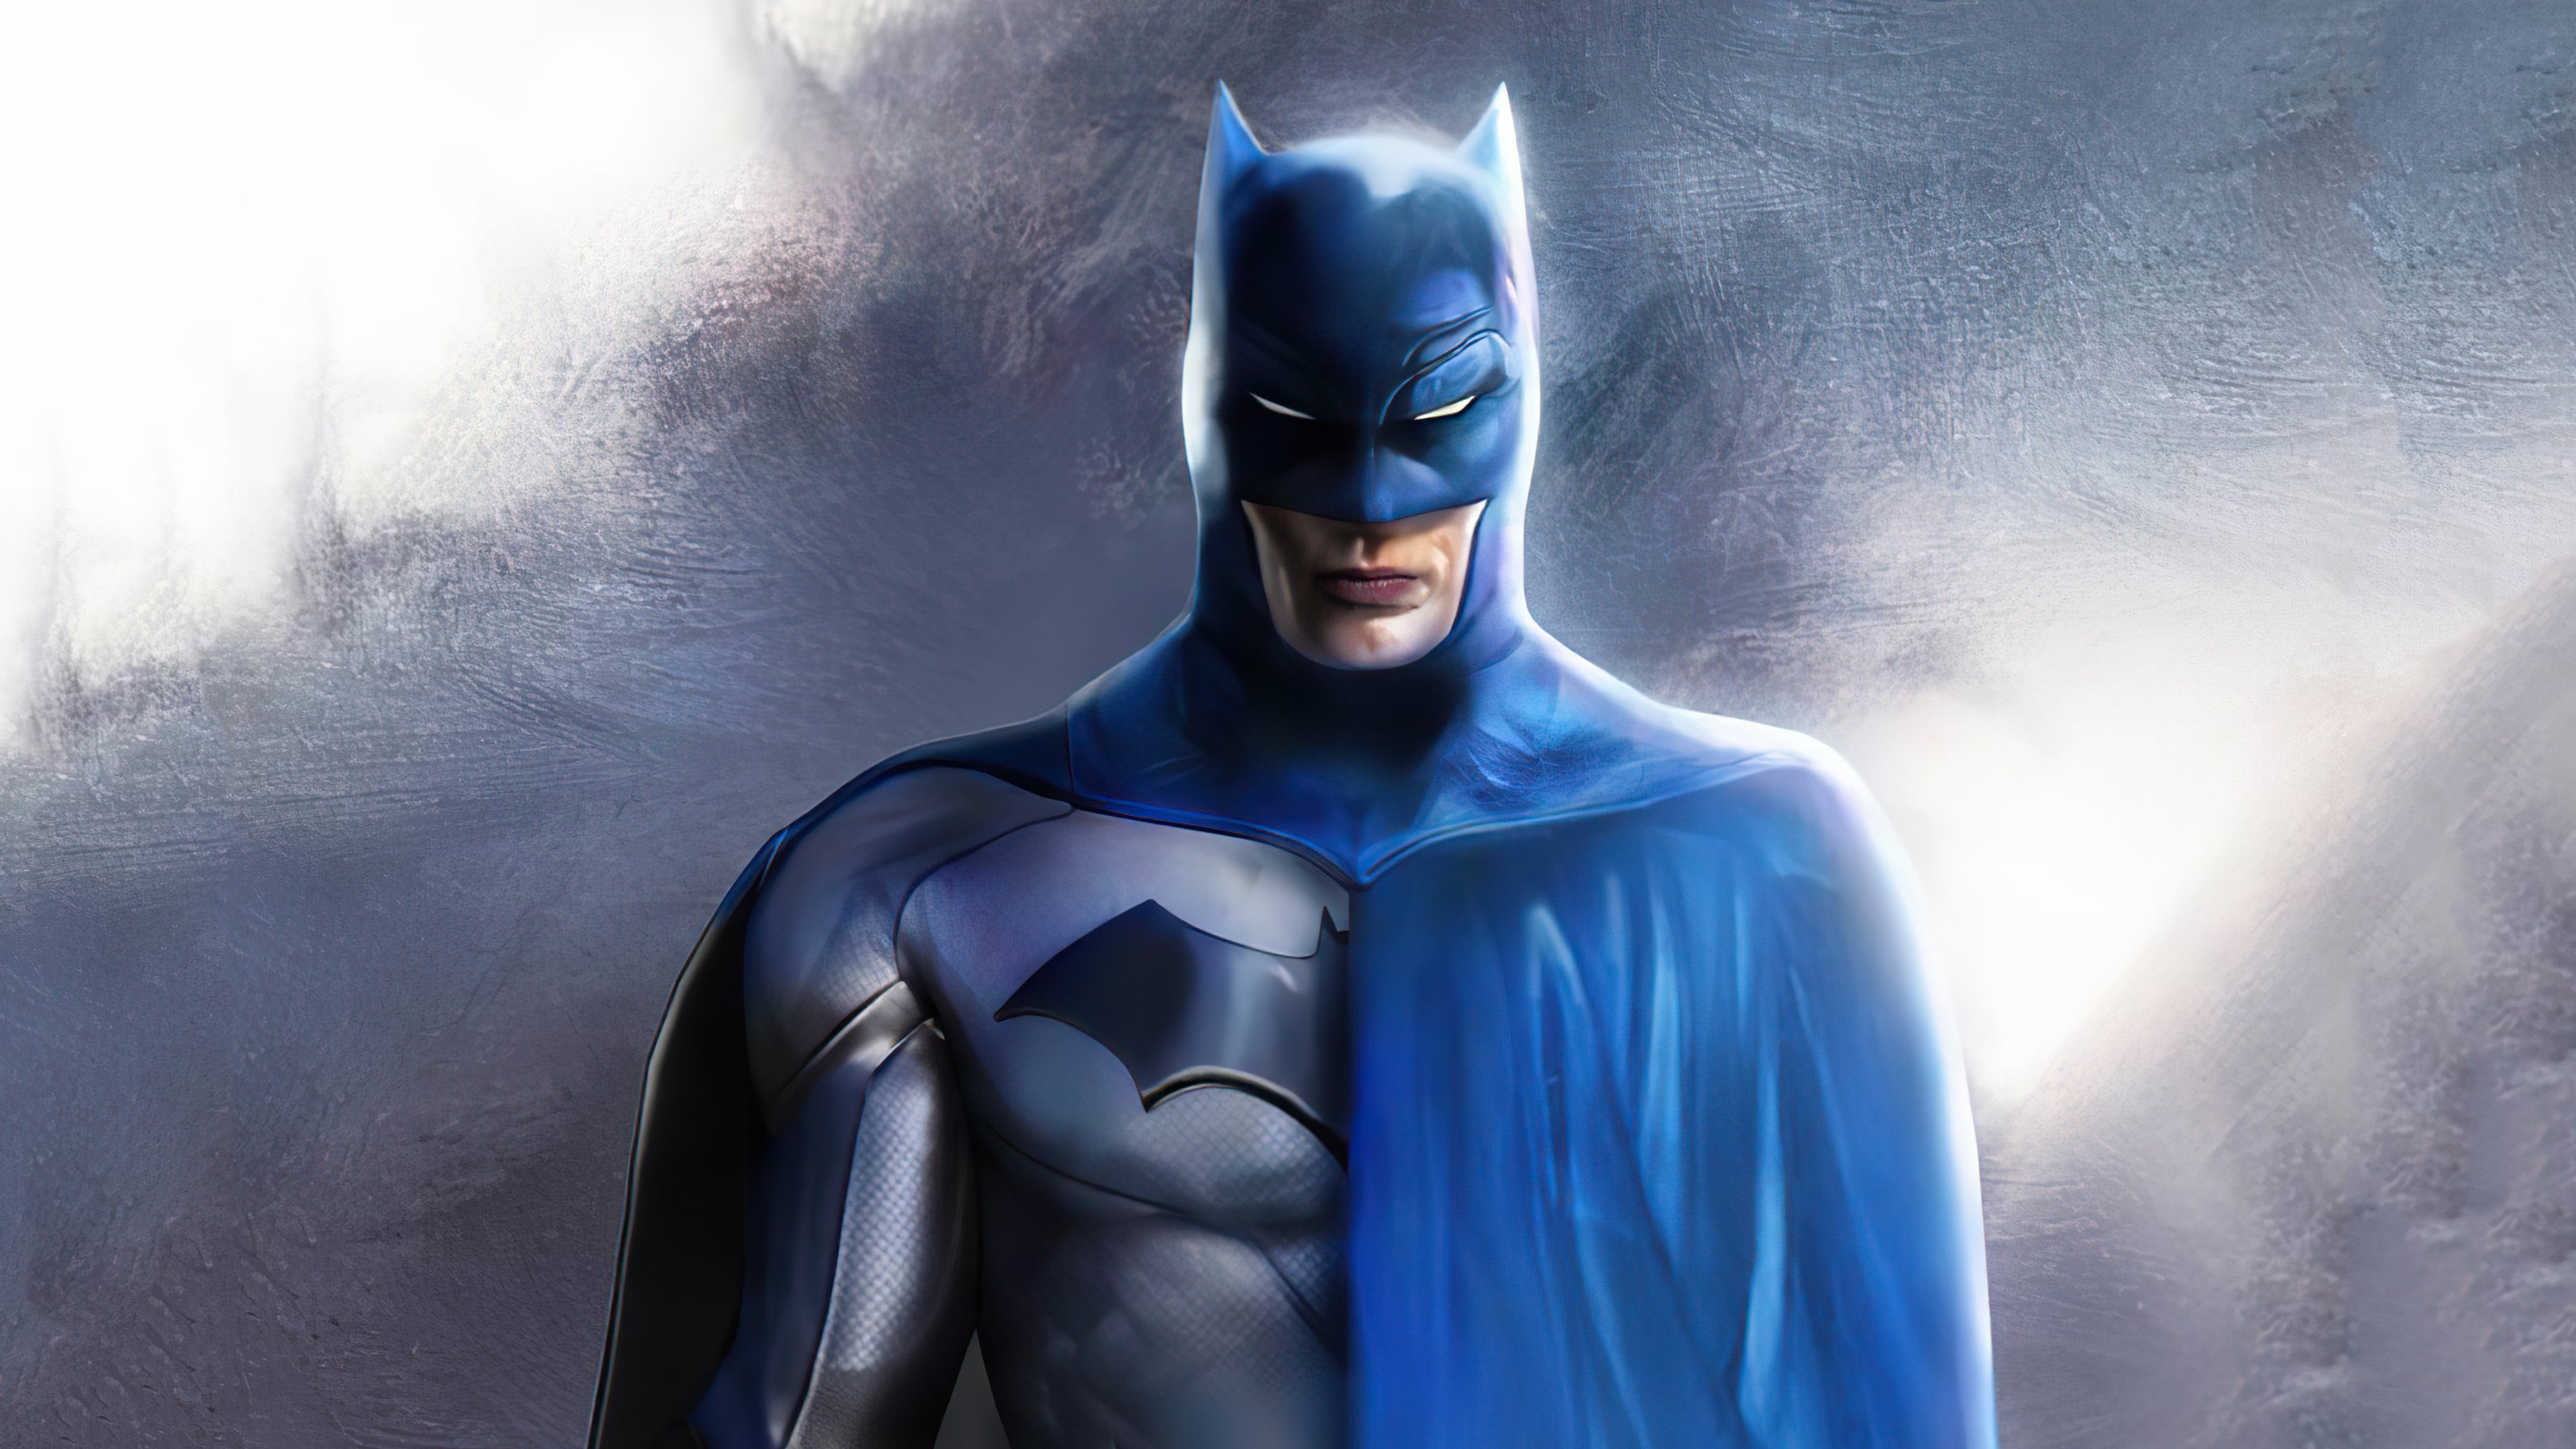 Batman Artwork 4k HD Superheroes, 4k Wallpaper, Image, Background, Photo and Picture